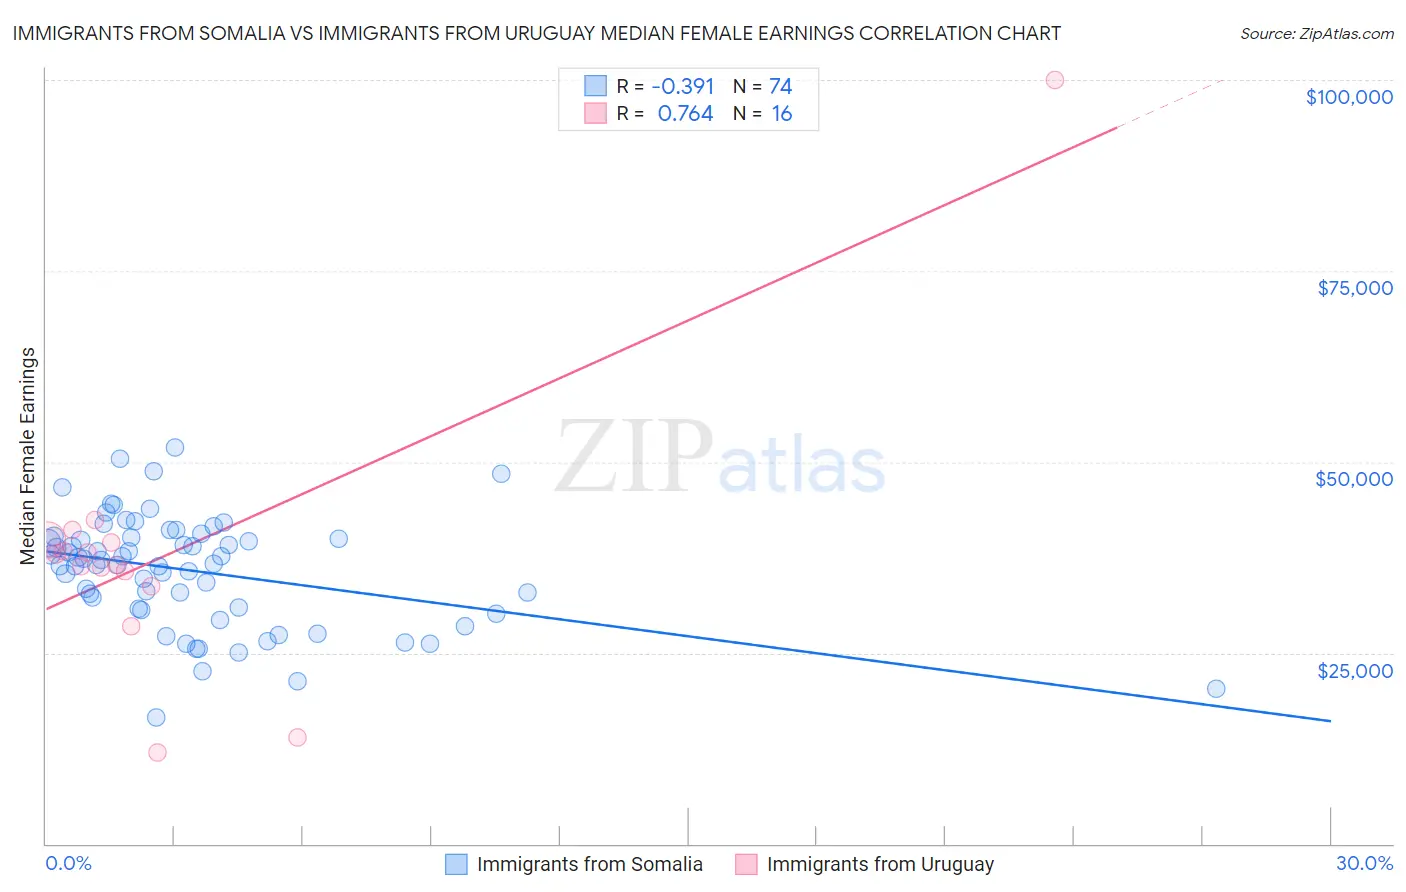 Immigrants from Somalia vs Immigrants from Uruguay Median Female Earnings